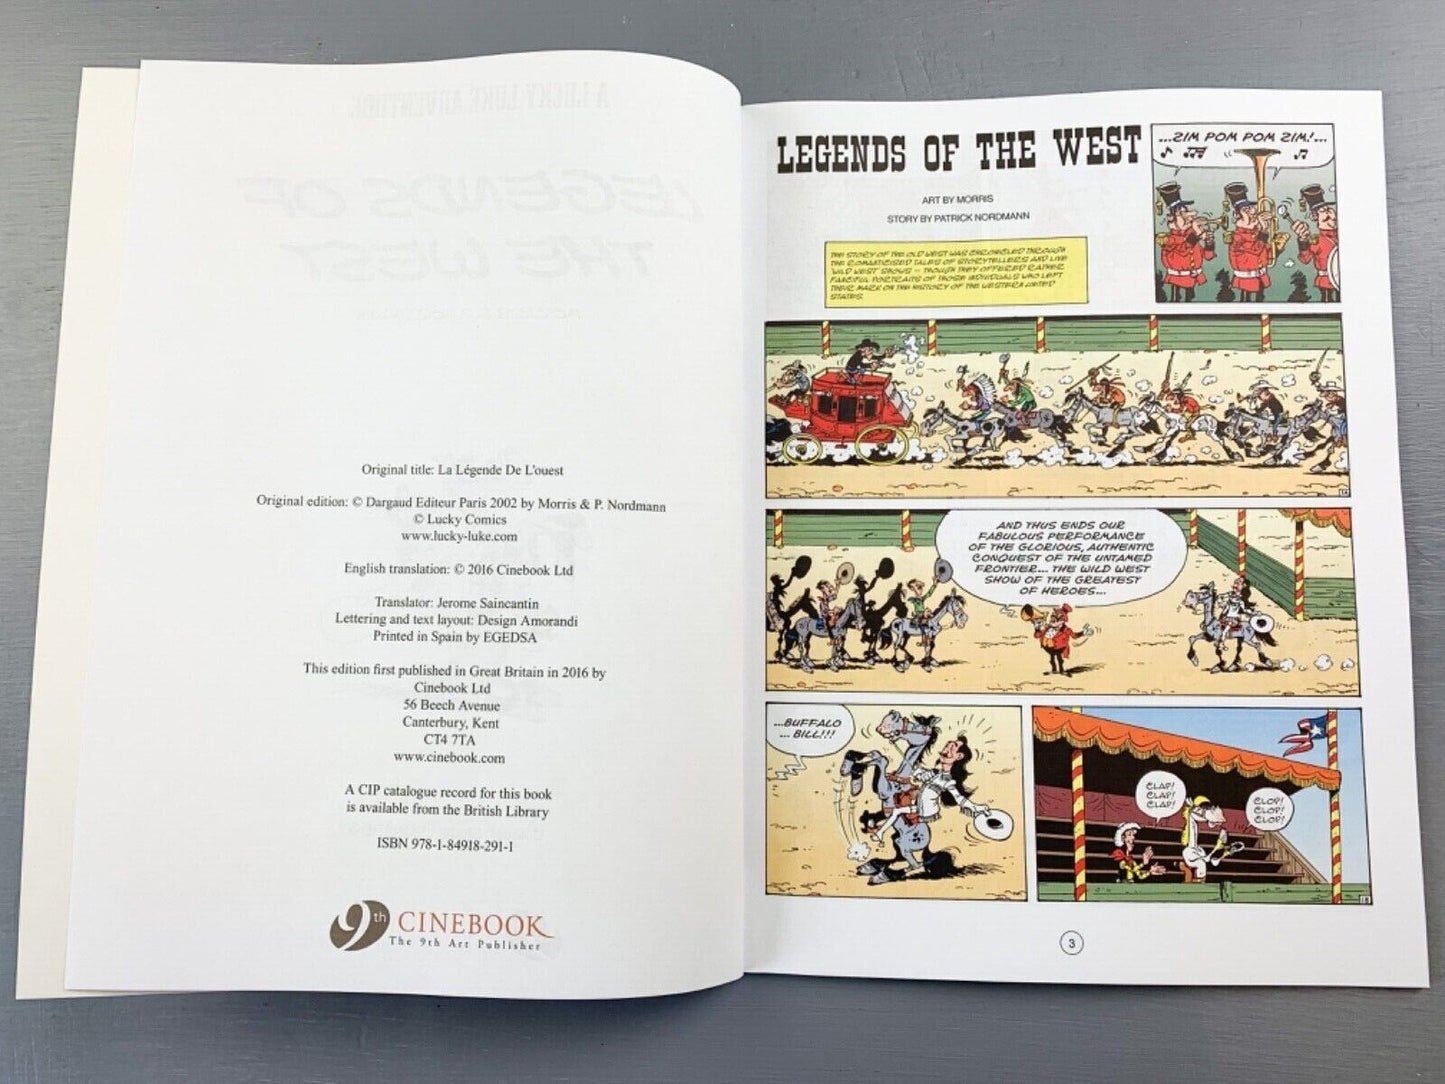 57 Legends of the West Lucky Luke Cinebook Paperback UK Comic Book